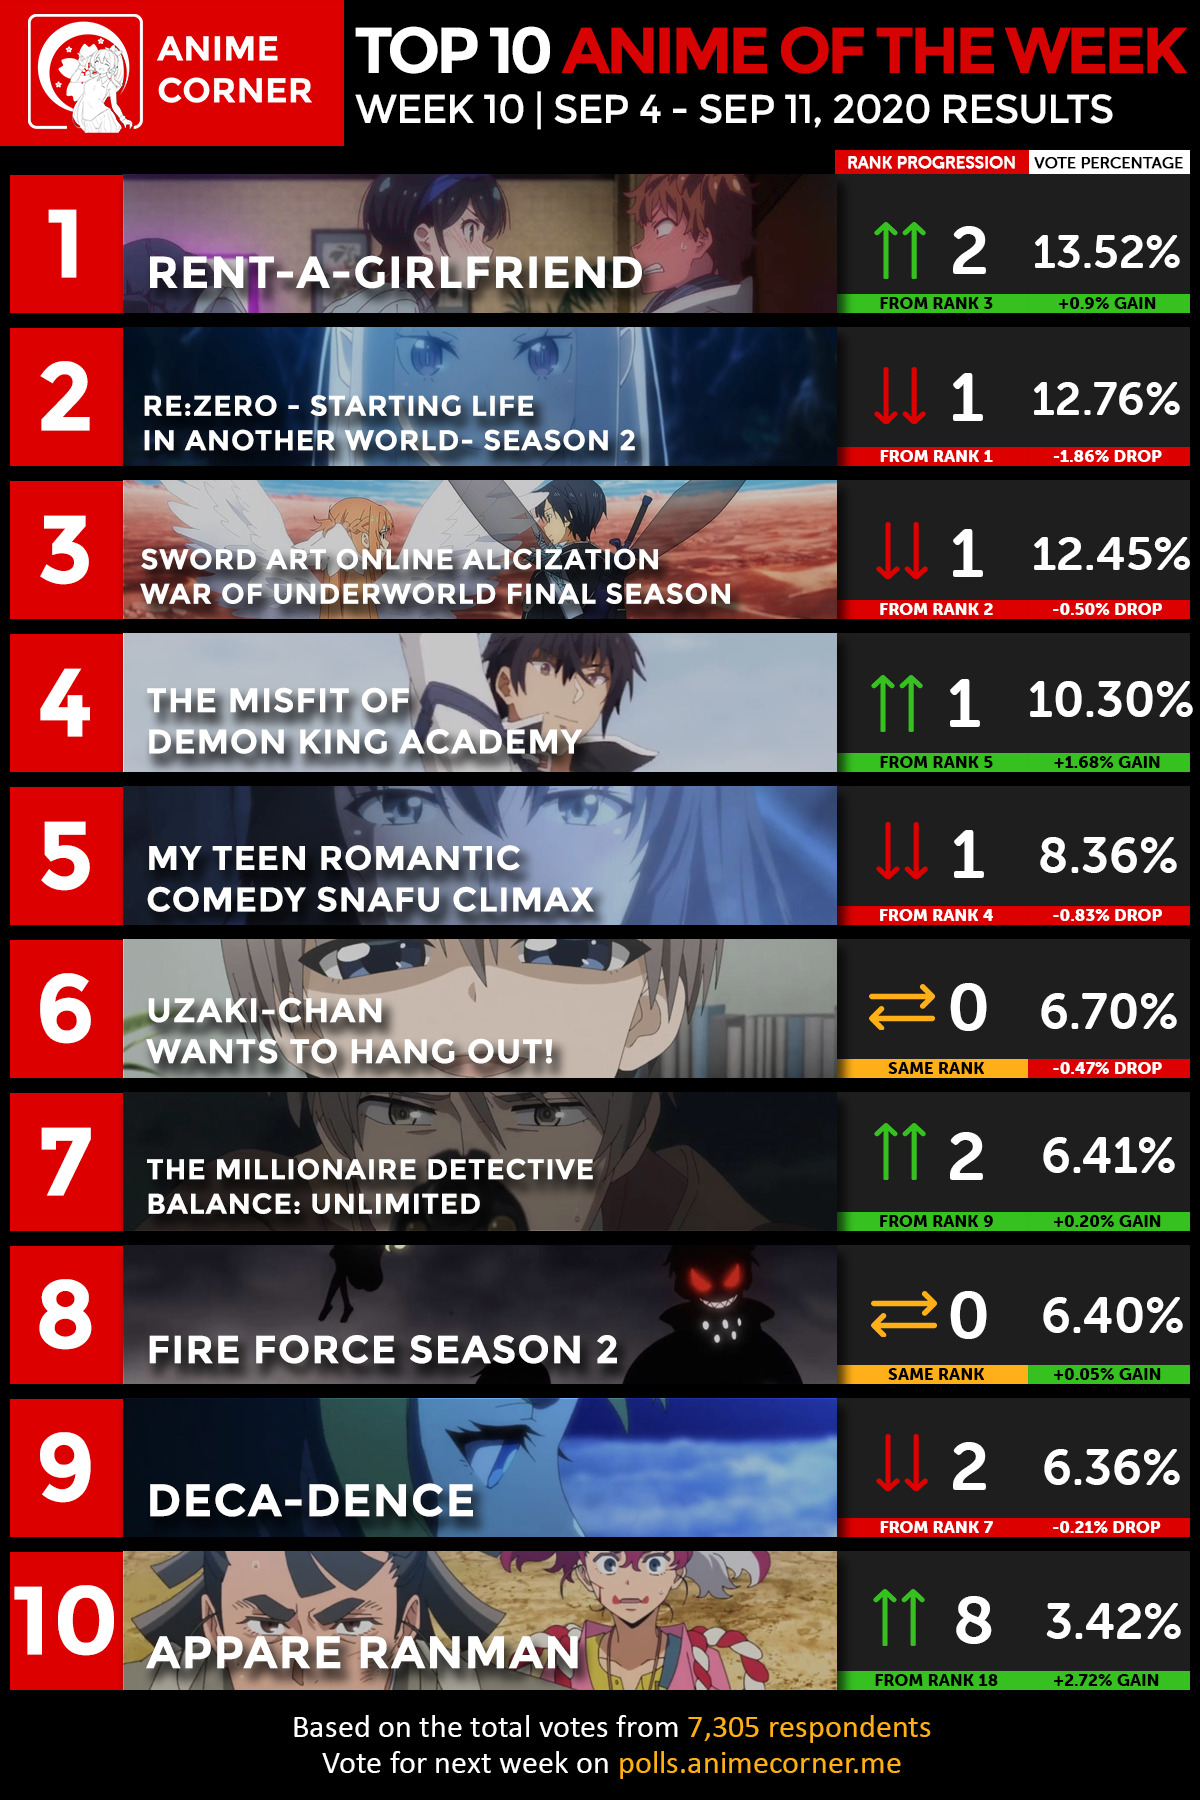 Summer 2020 Anime, Seasonal Chart